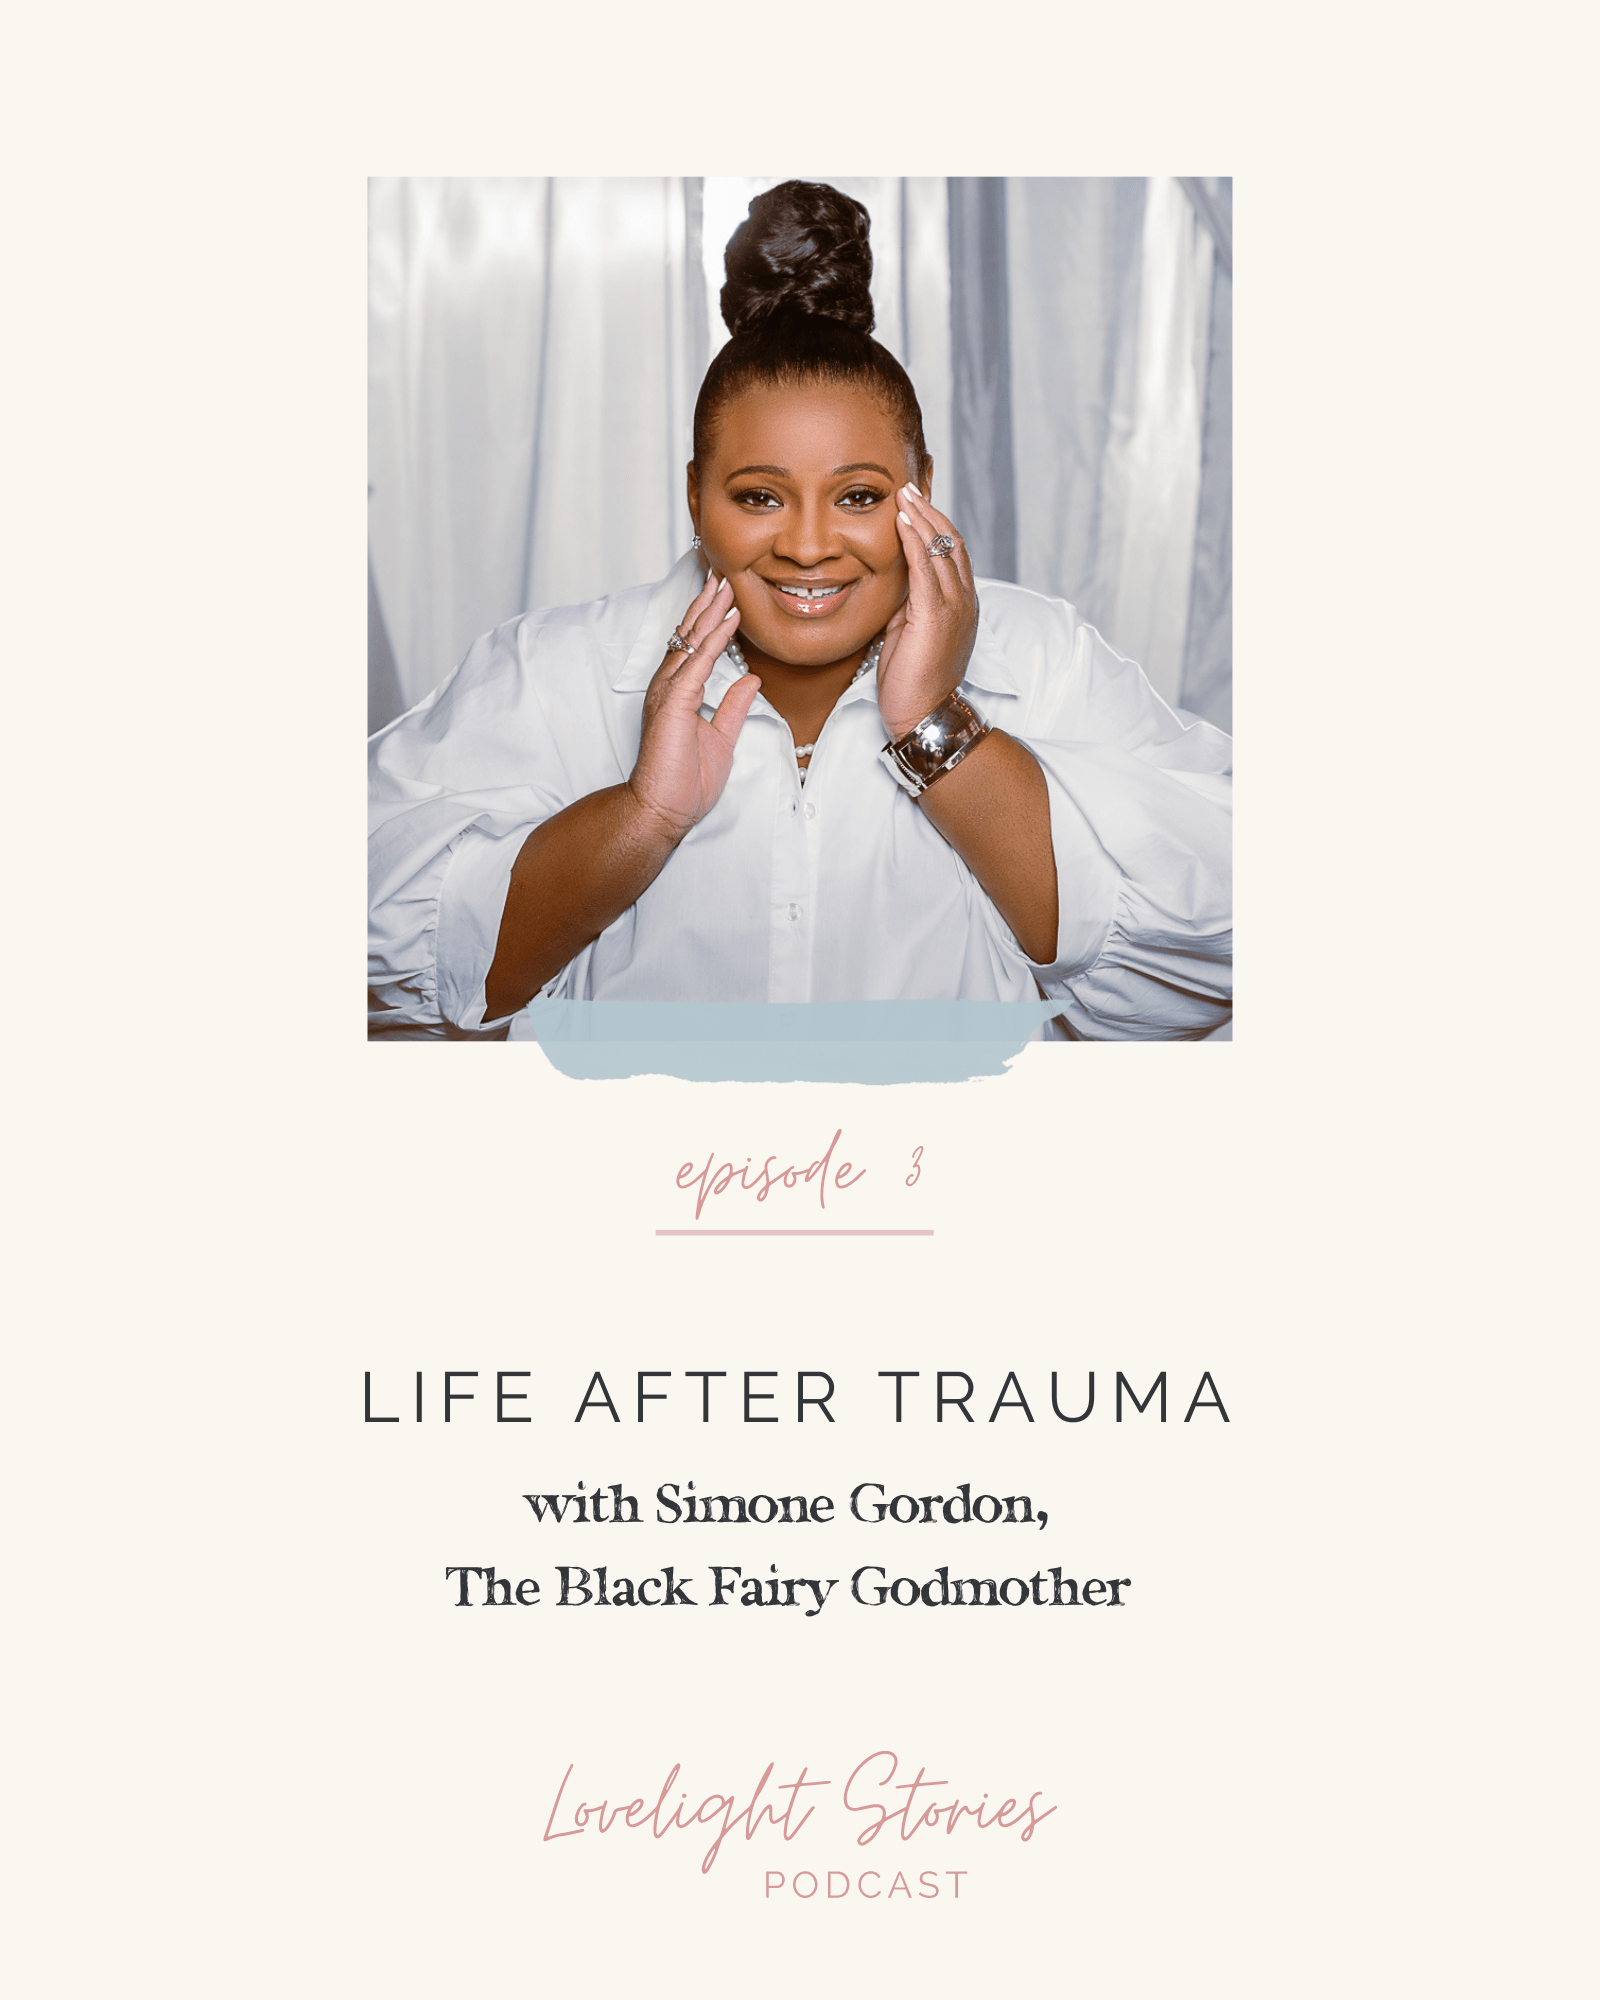 Life after trauma with Simone Gordon